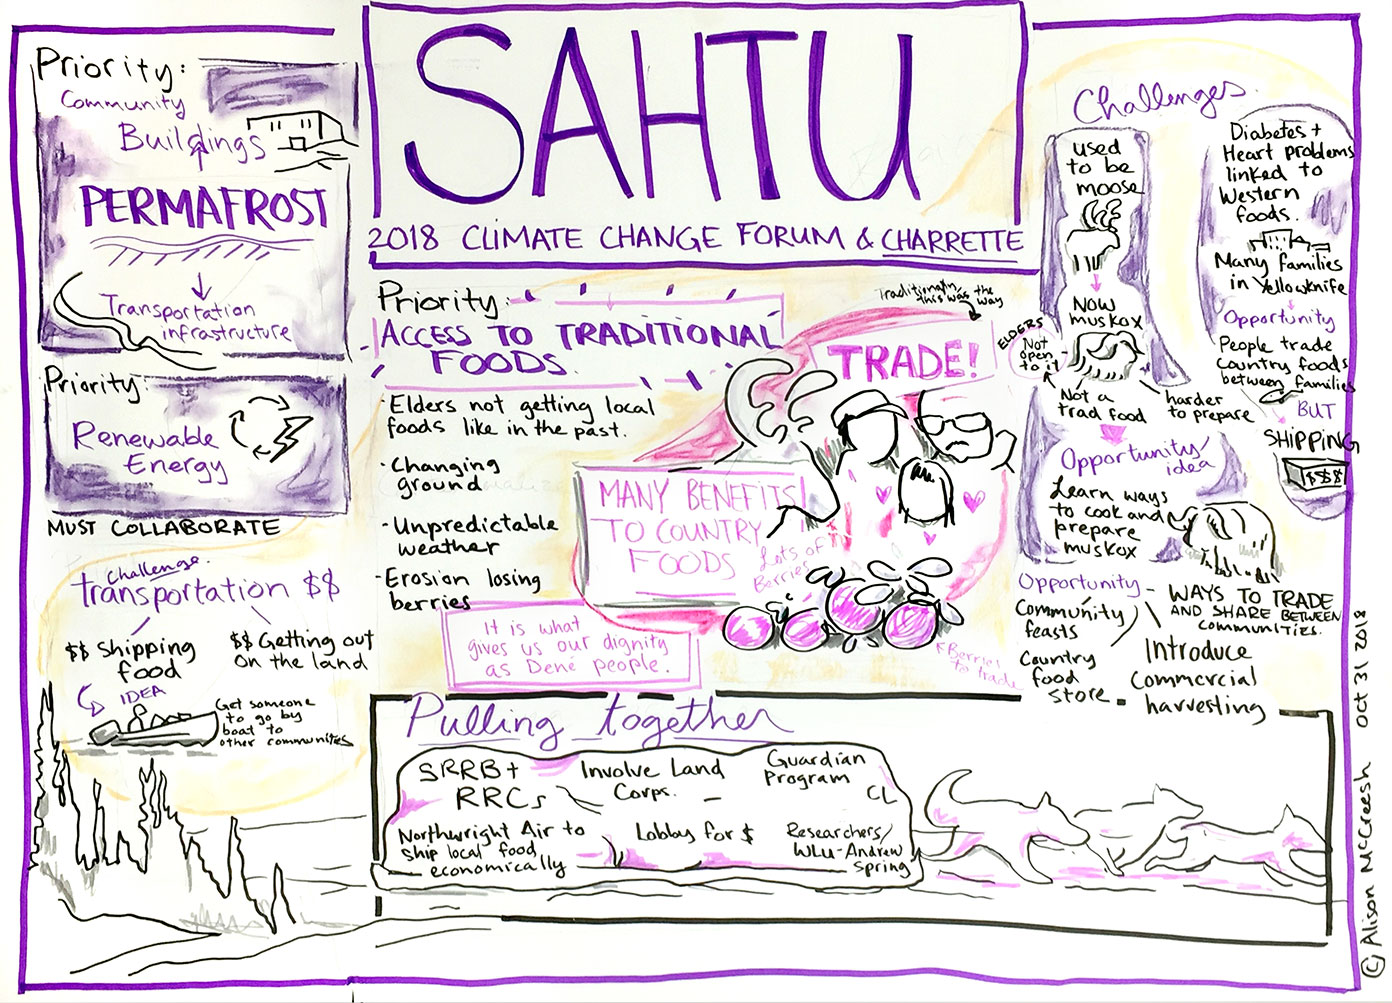 Charrette depicting the Sahtu Region’s climate priorities. Credit: Alison McCreesh